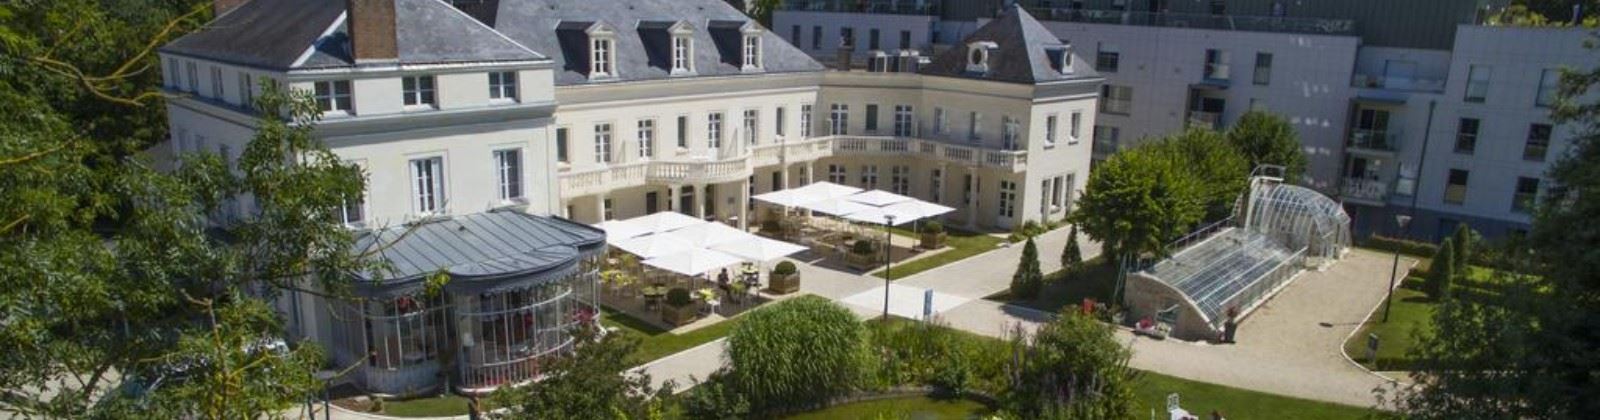 OLEVENE Image - clarion-hotel-chateau-belmont-tours-olevene-restaurant-seminaires-reunion-booking-